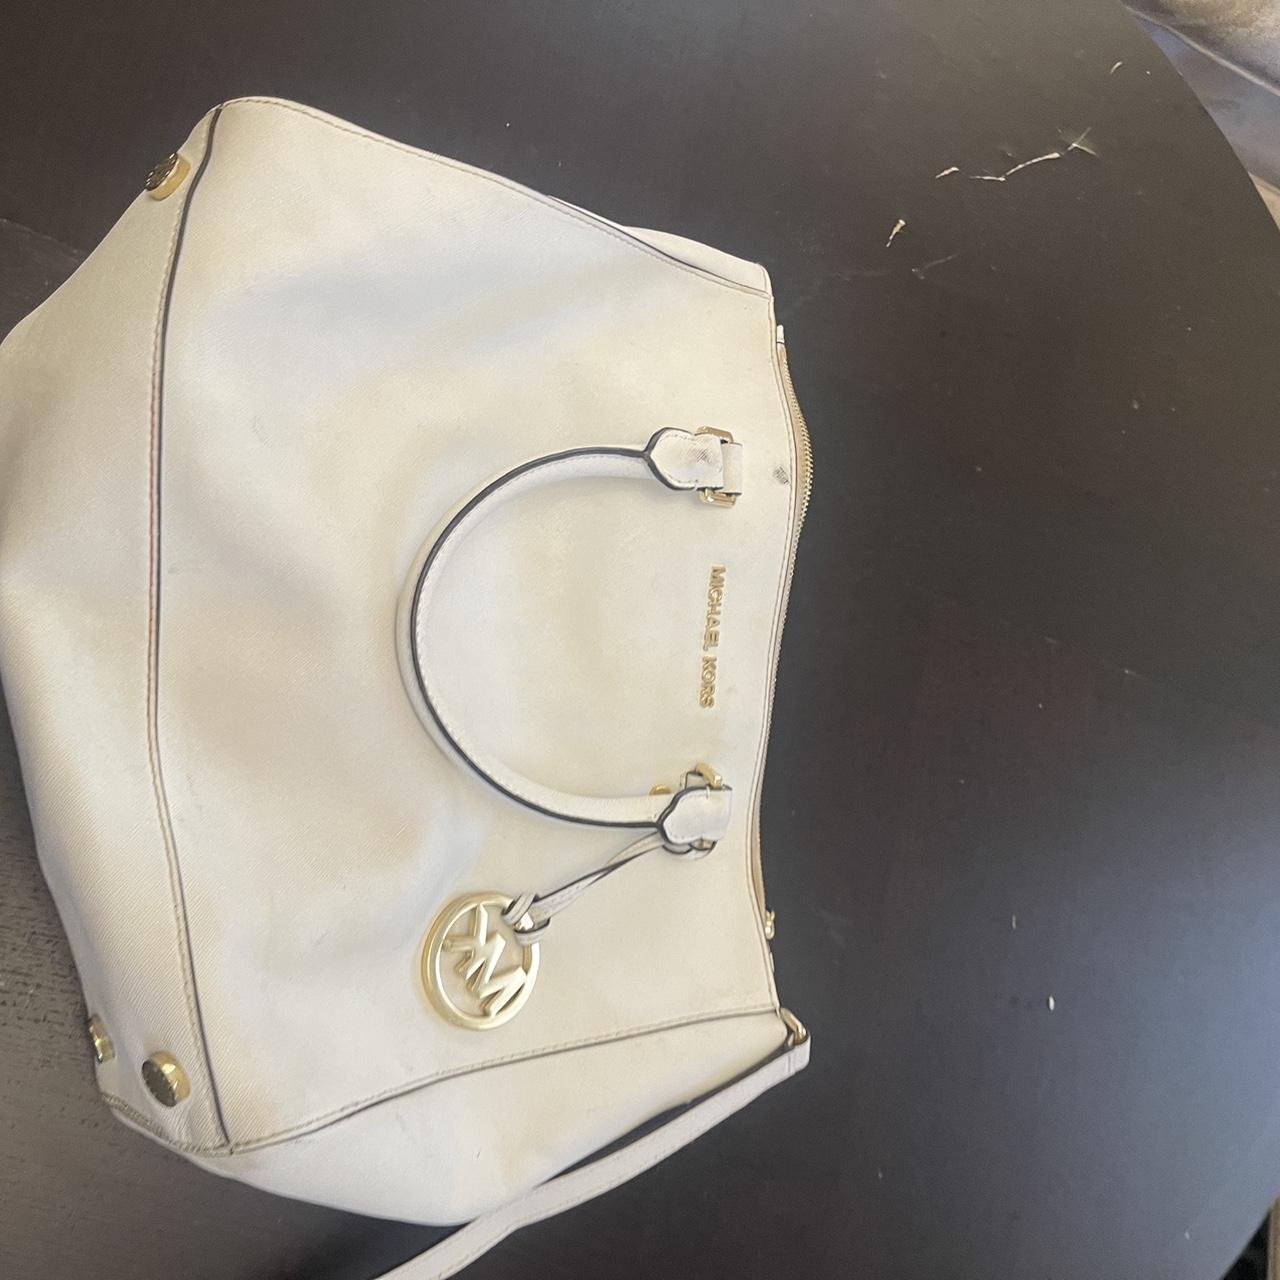 Michael Kors Black Tote Bag Used | eBay